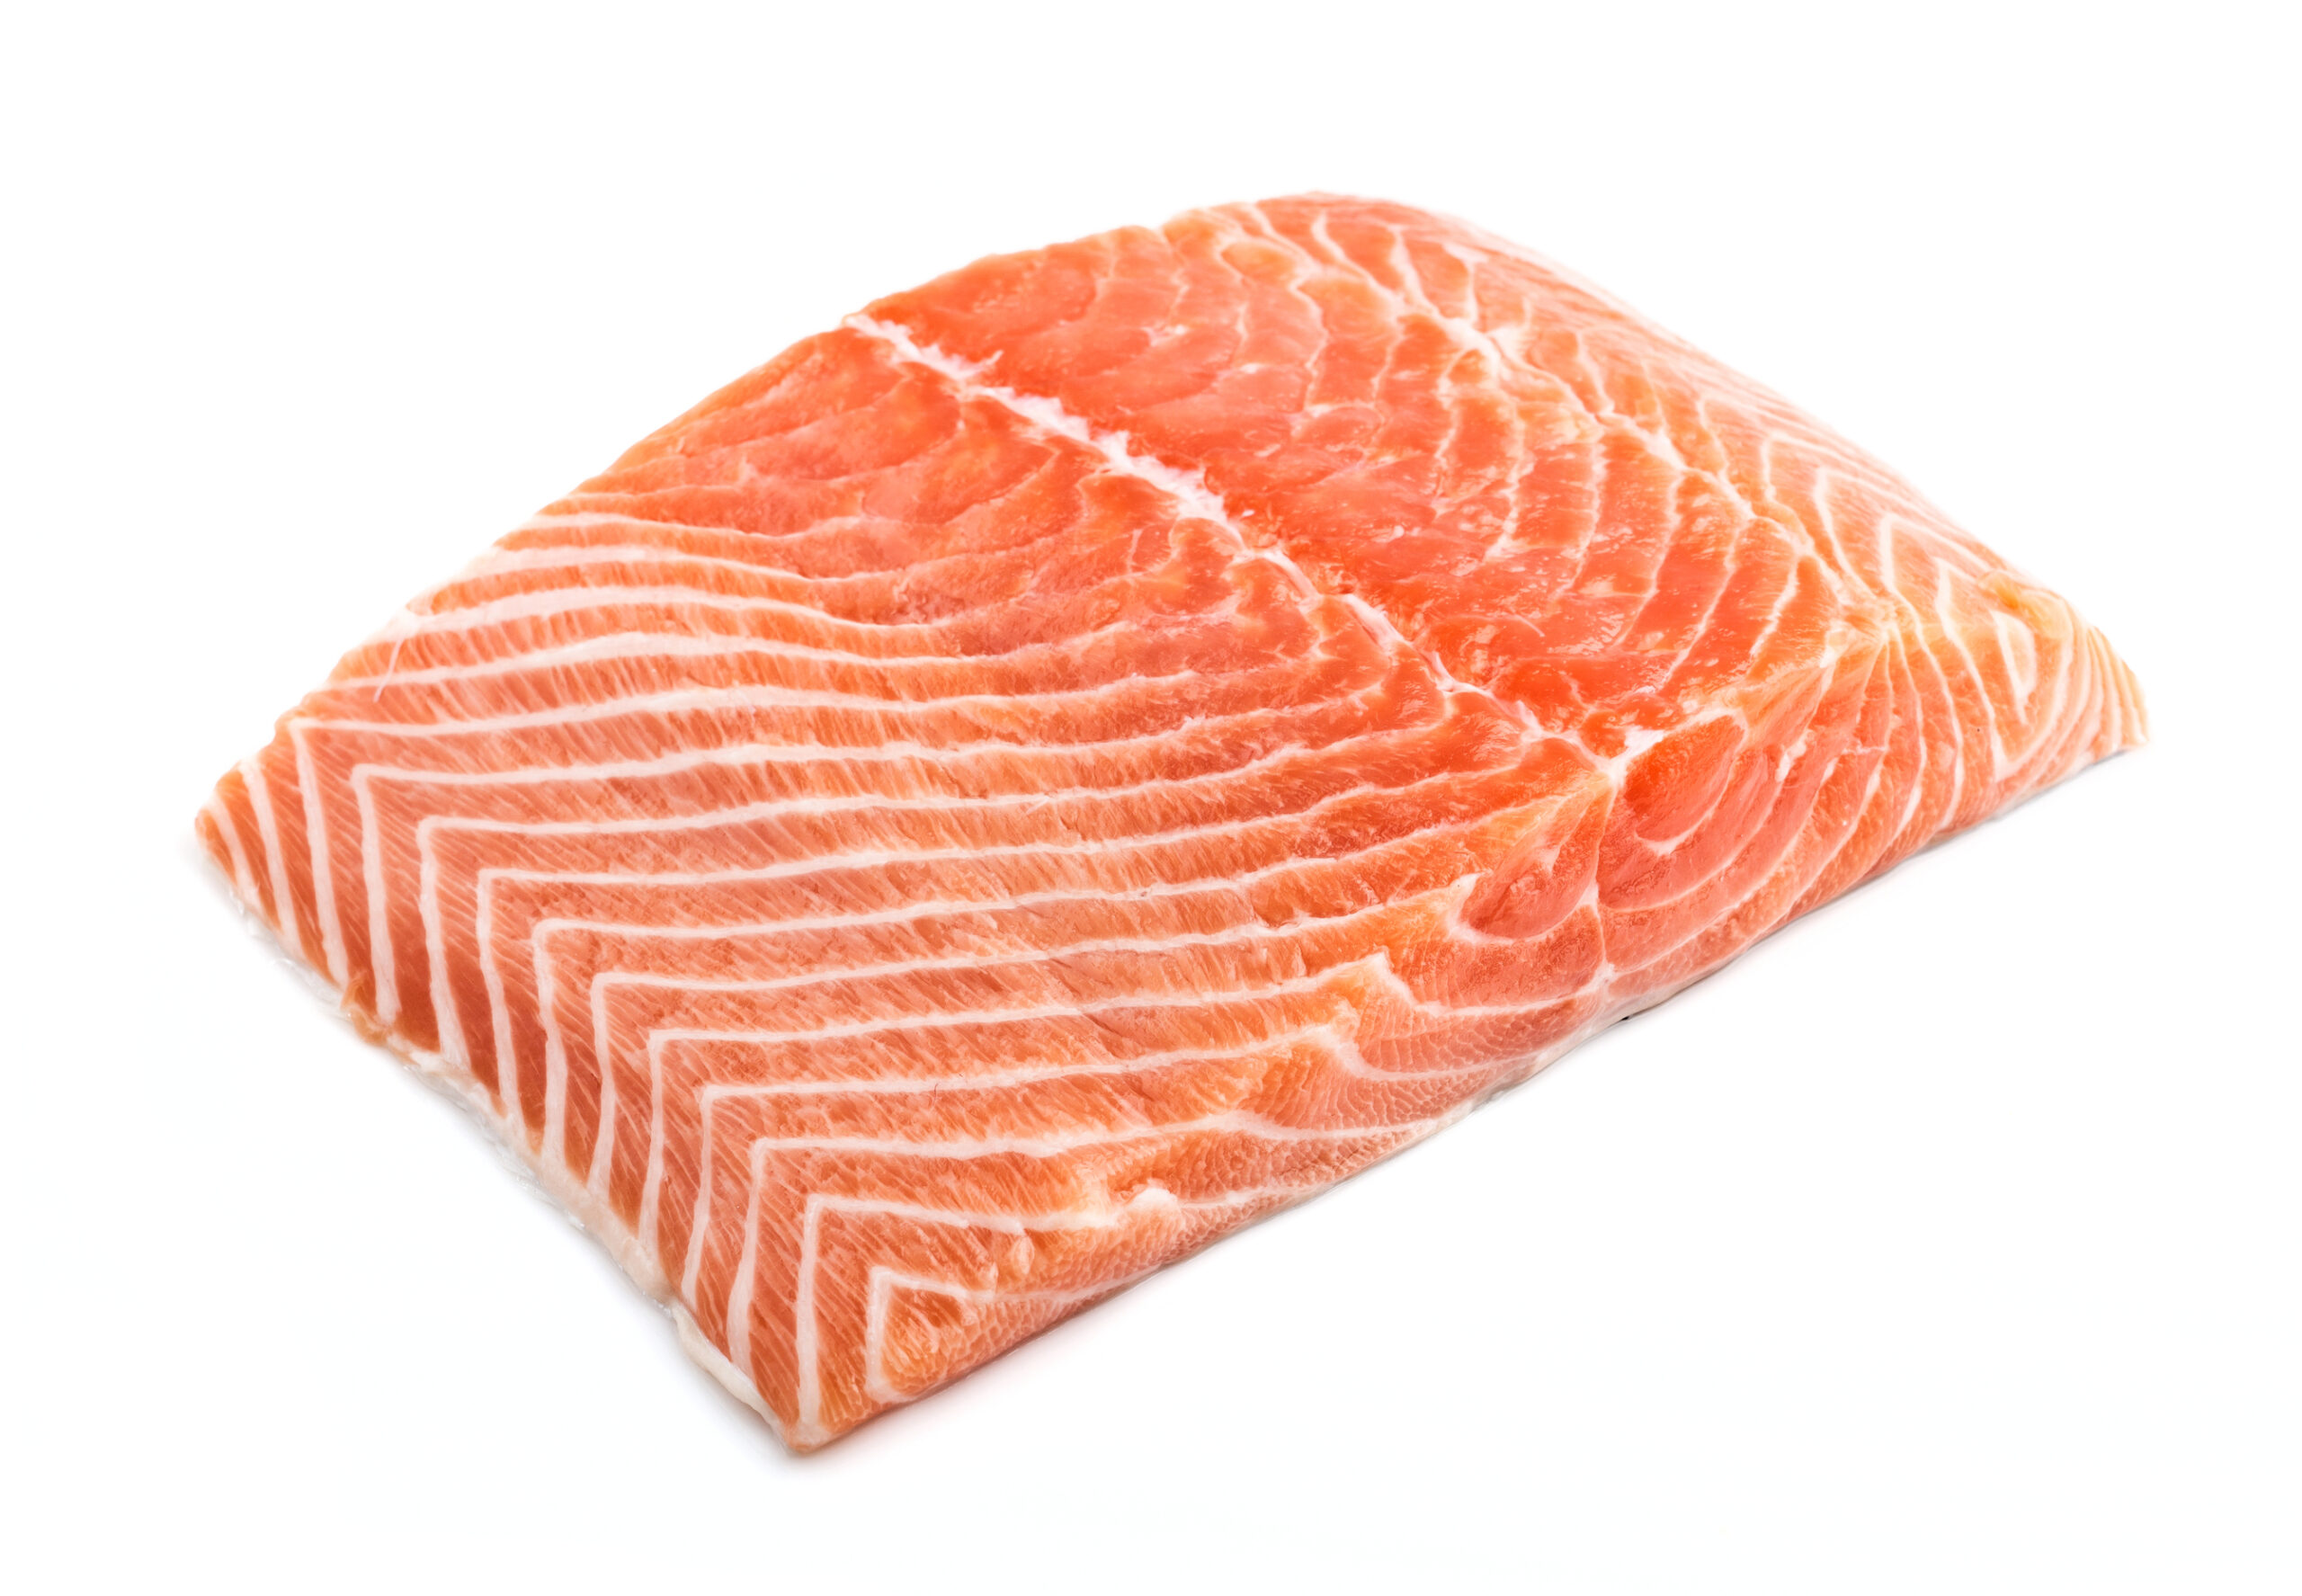 An image of farmed Atlantic salmon.